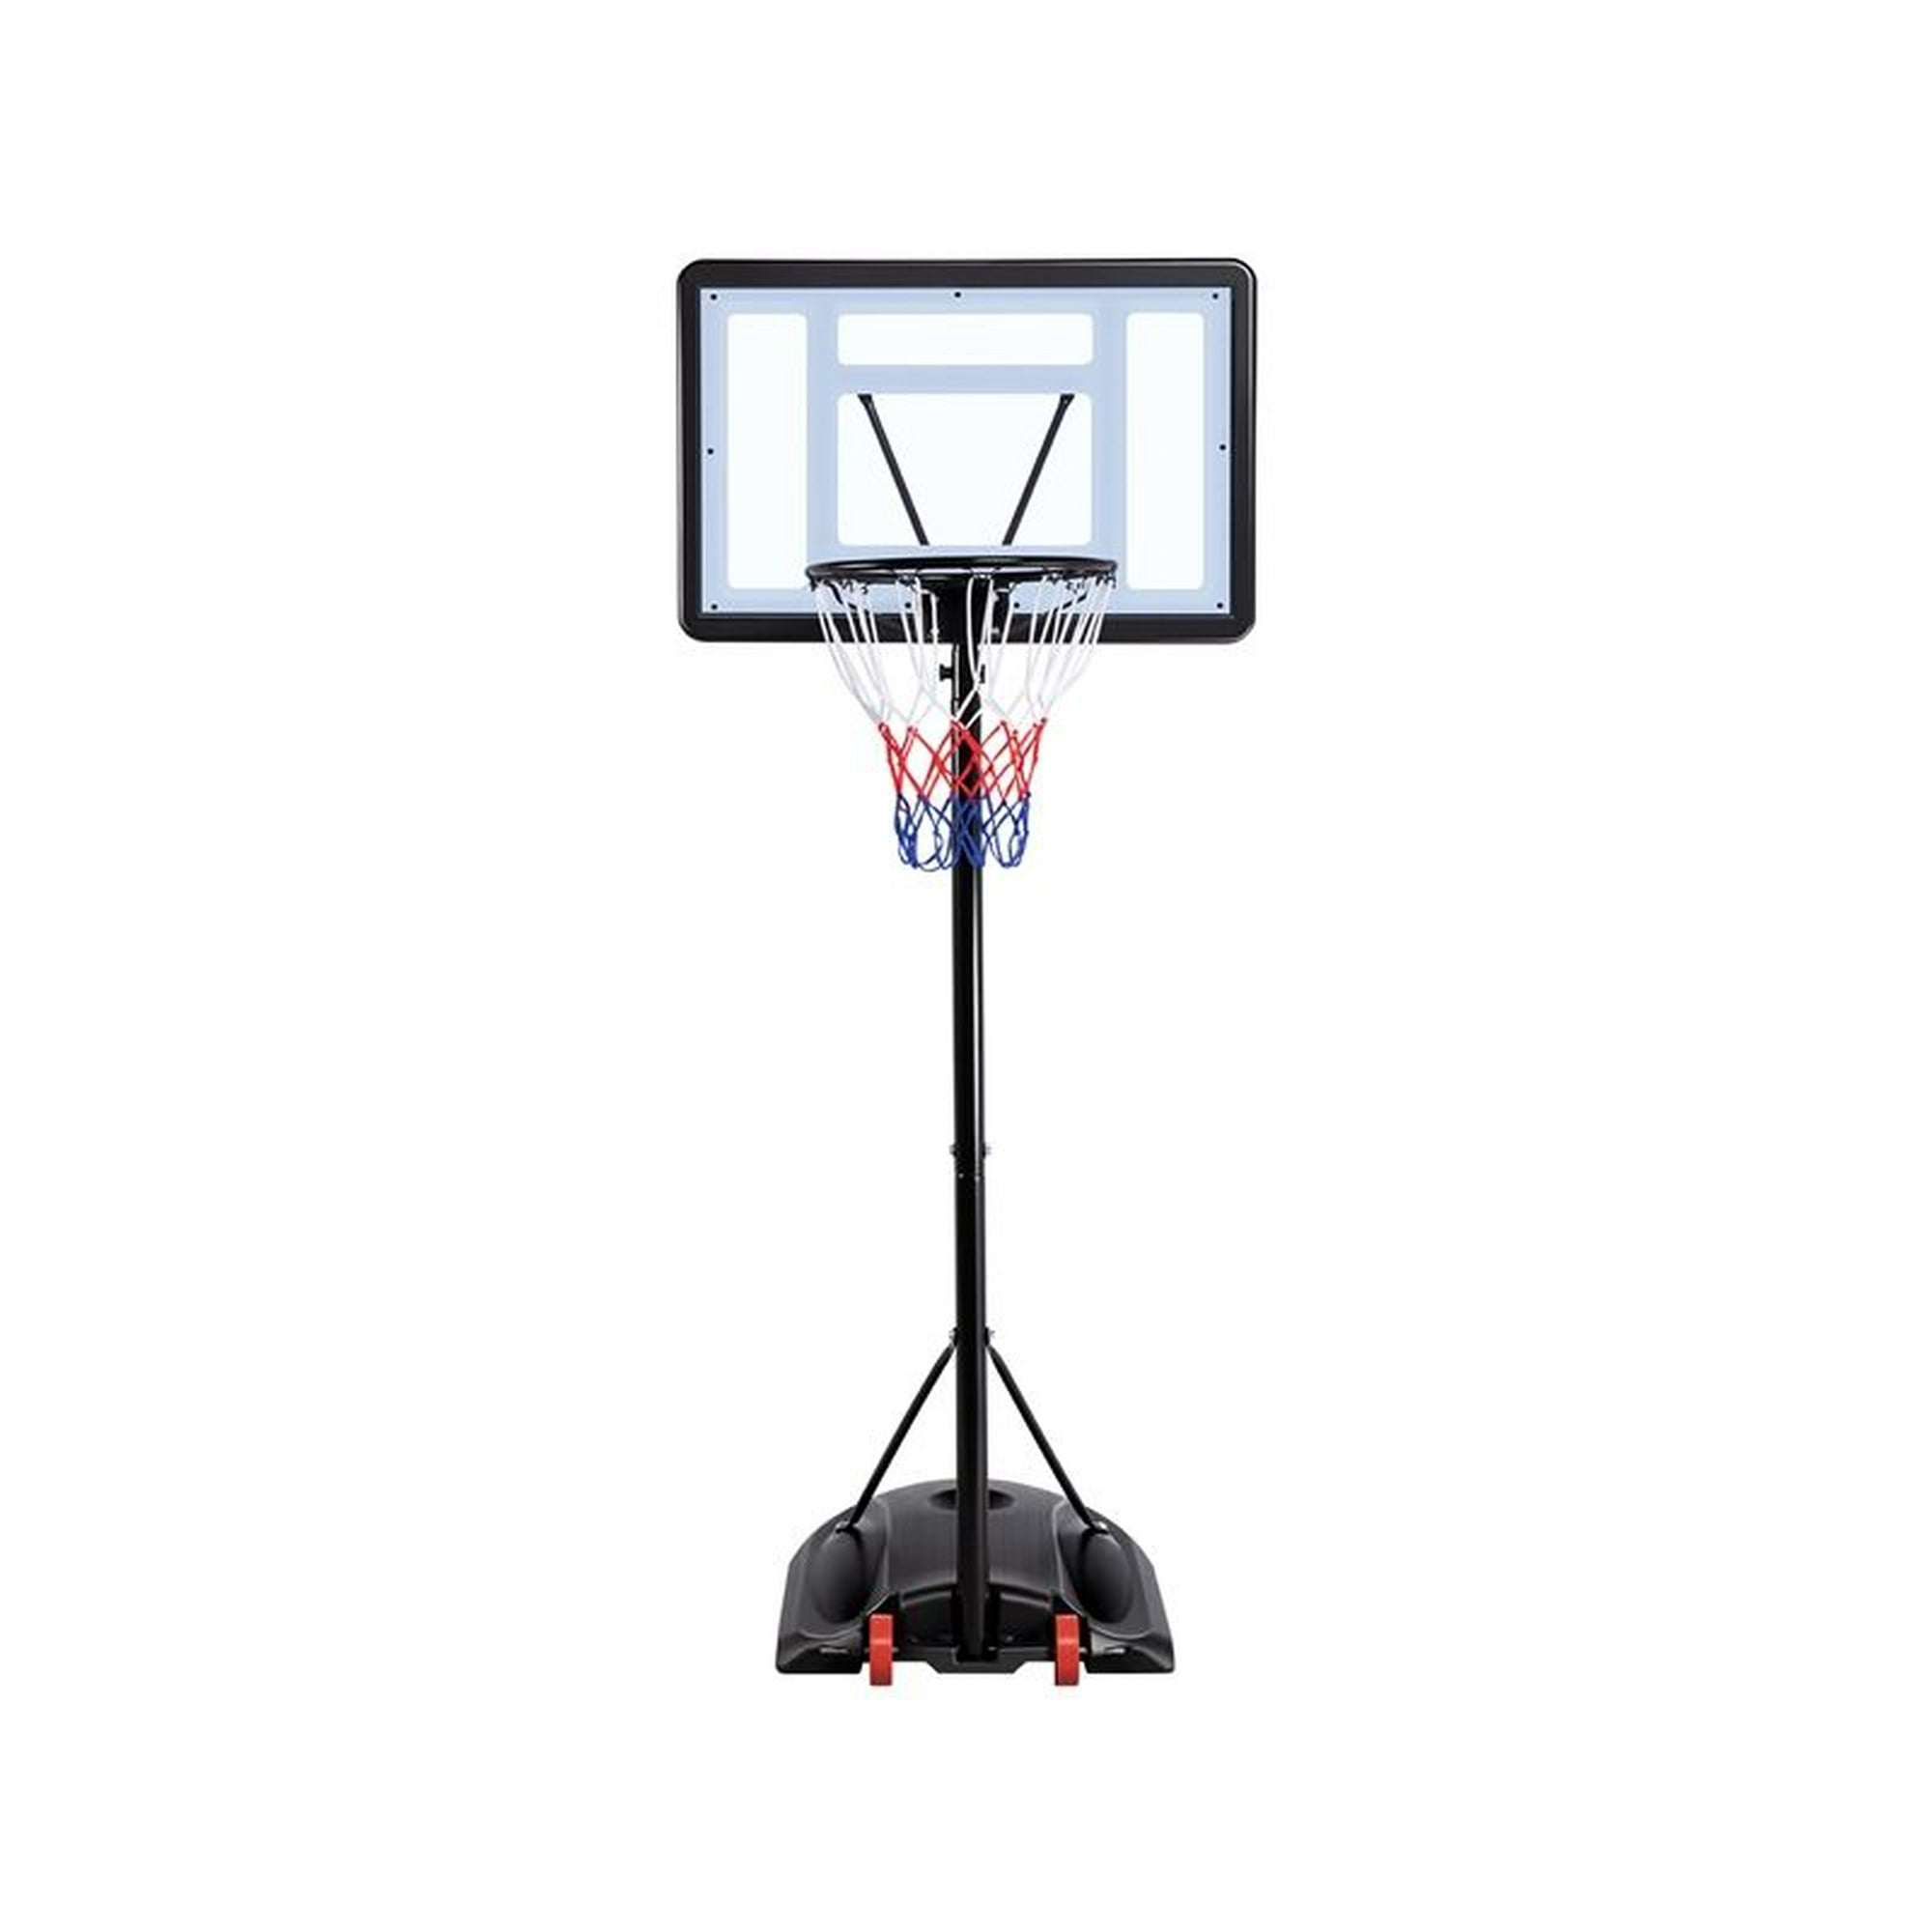 Canasta de baloncesto infantil con soporte ajustable 170 cm